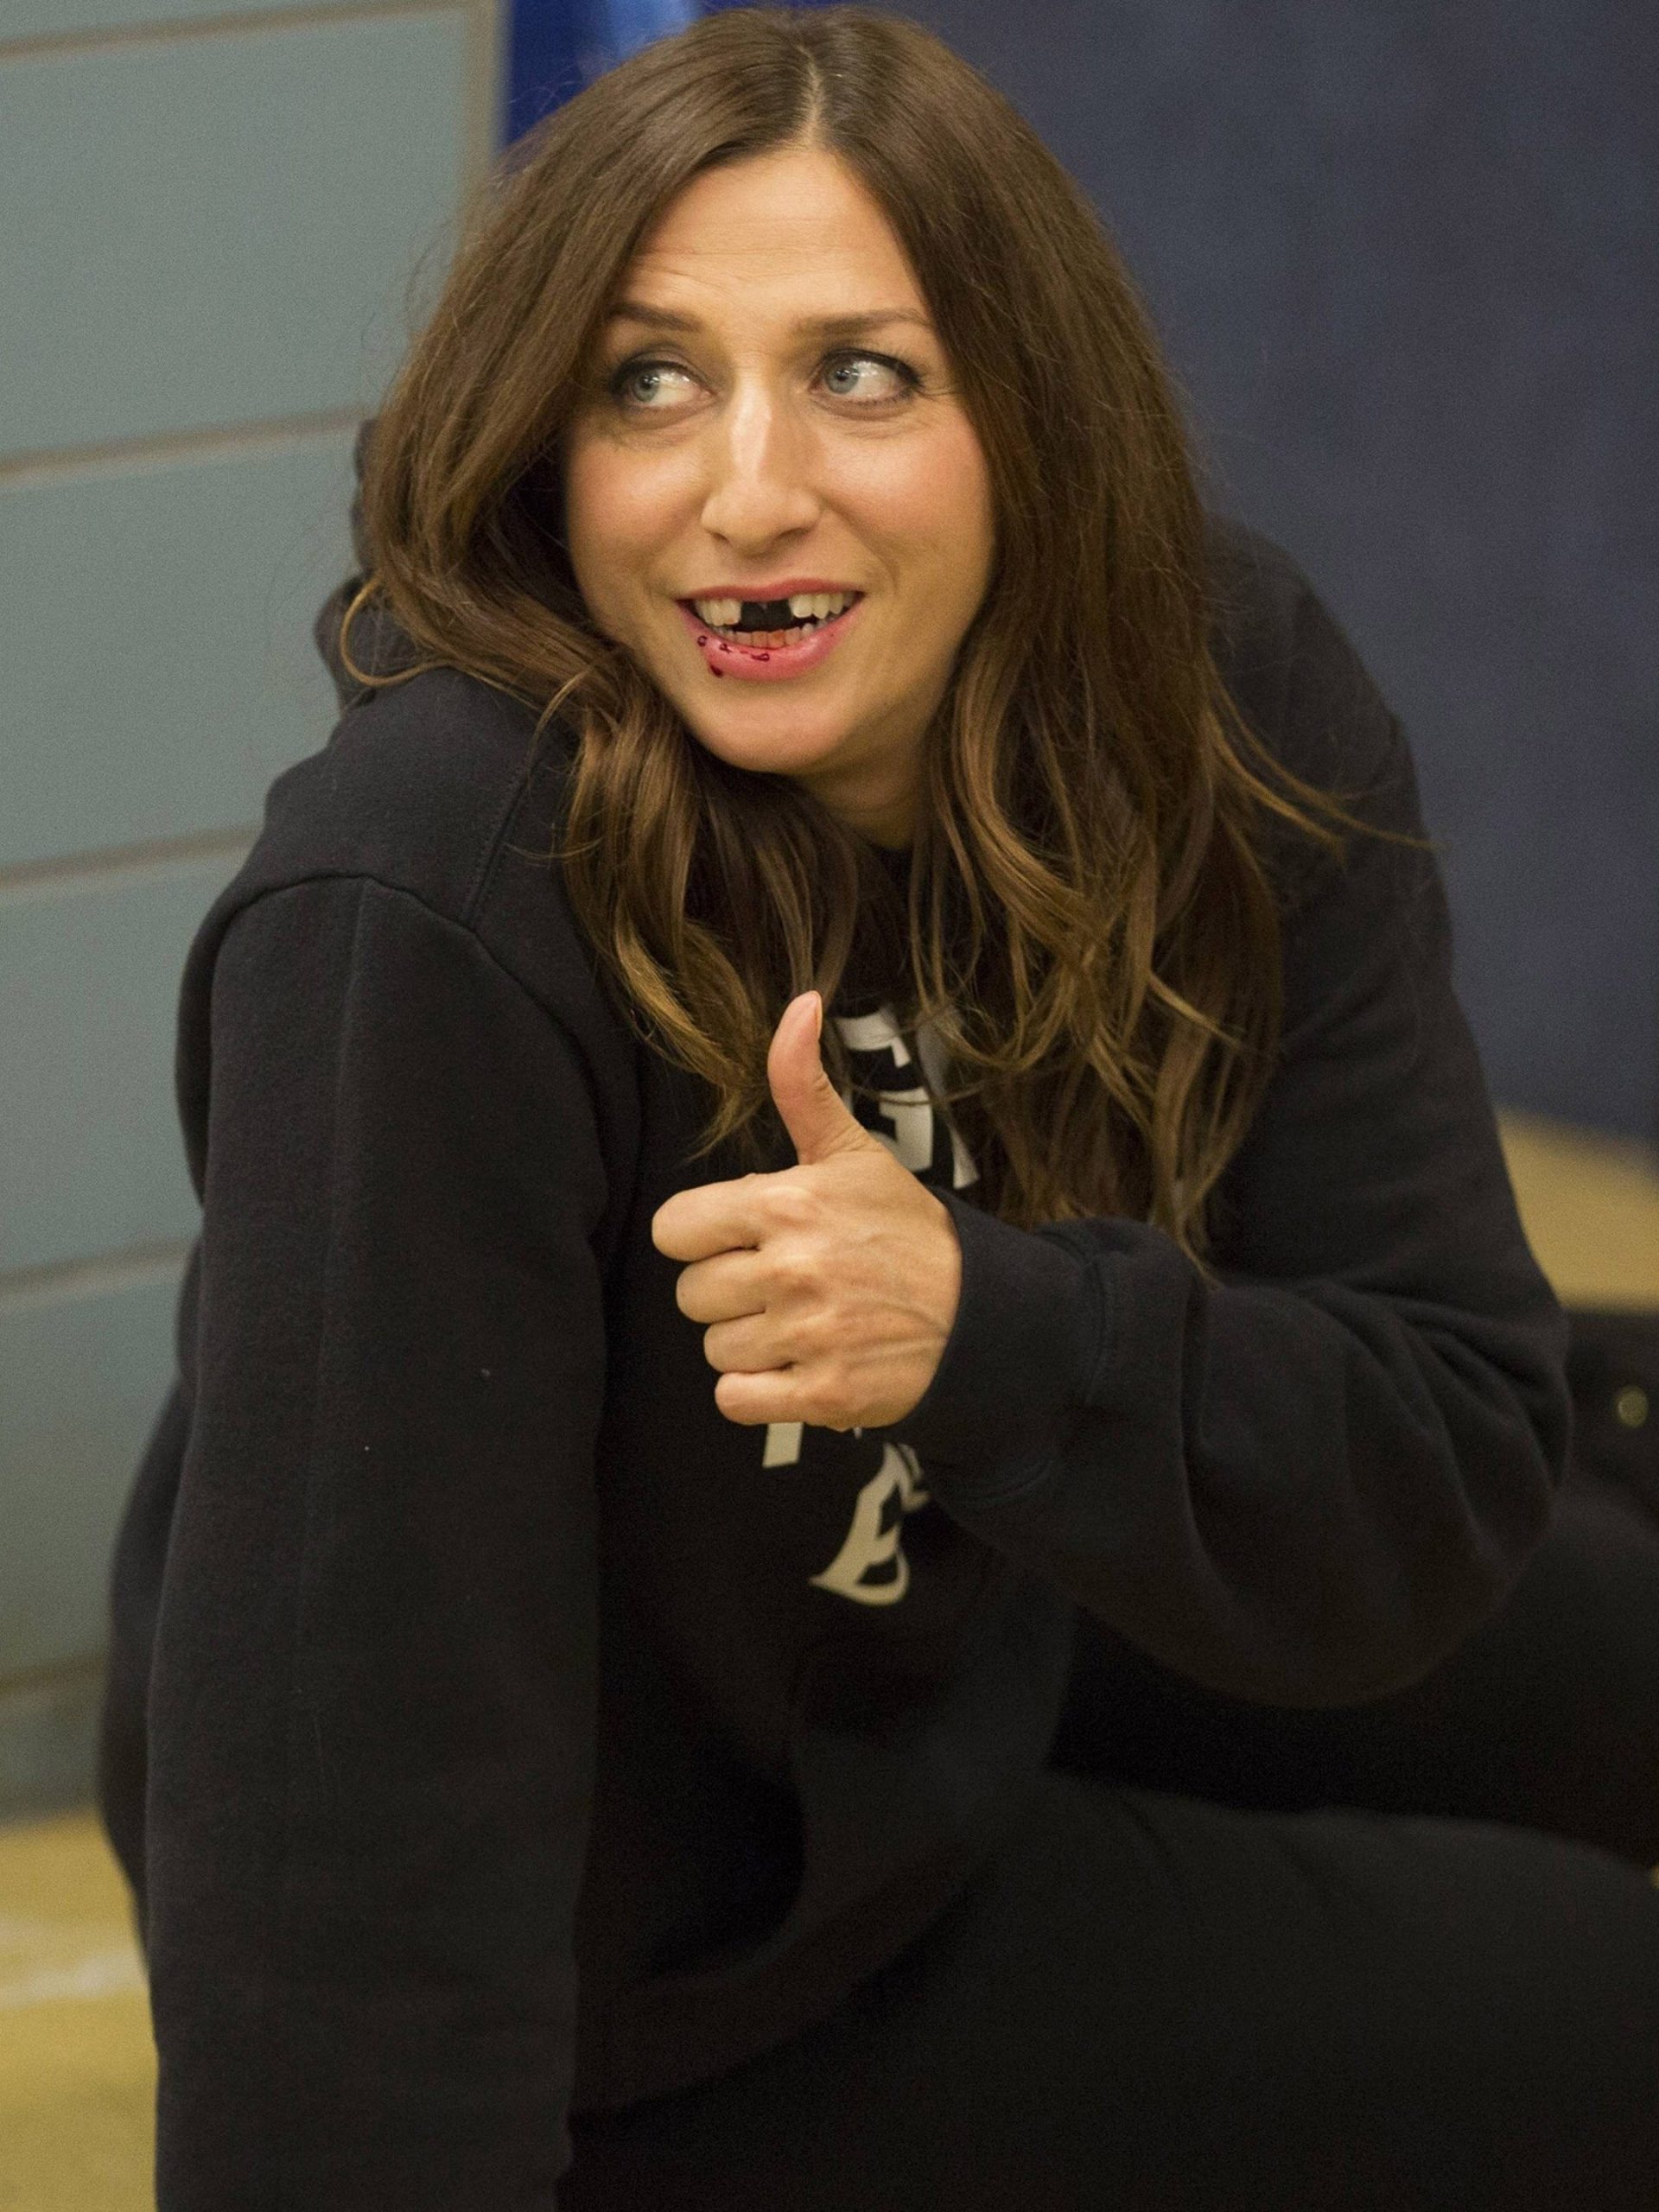 Chelsea Peretti with her fake teeth in 'Brooklyn Nine-Nine' Season 4 Episode 5